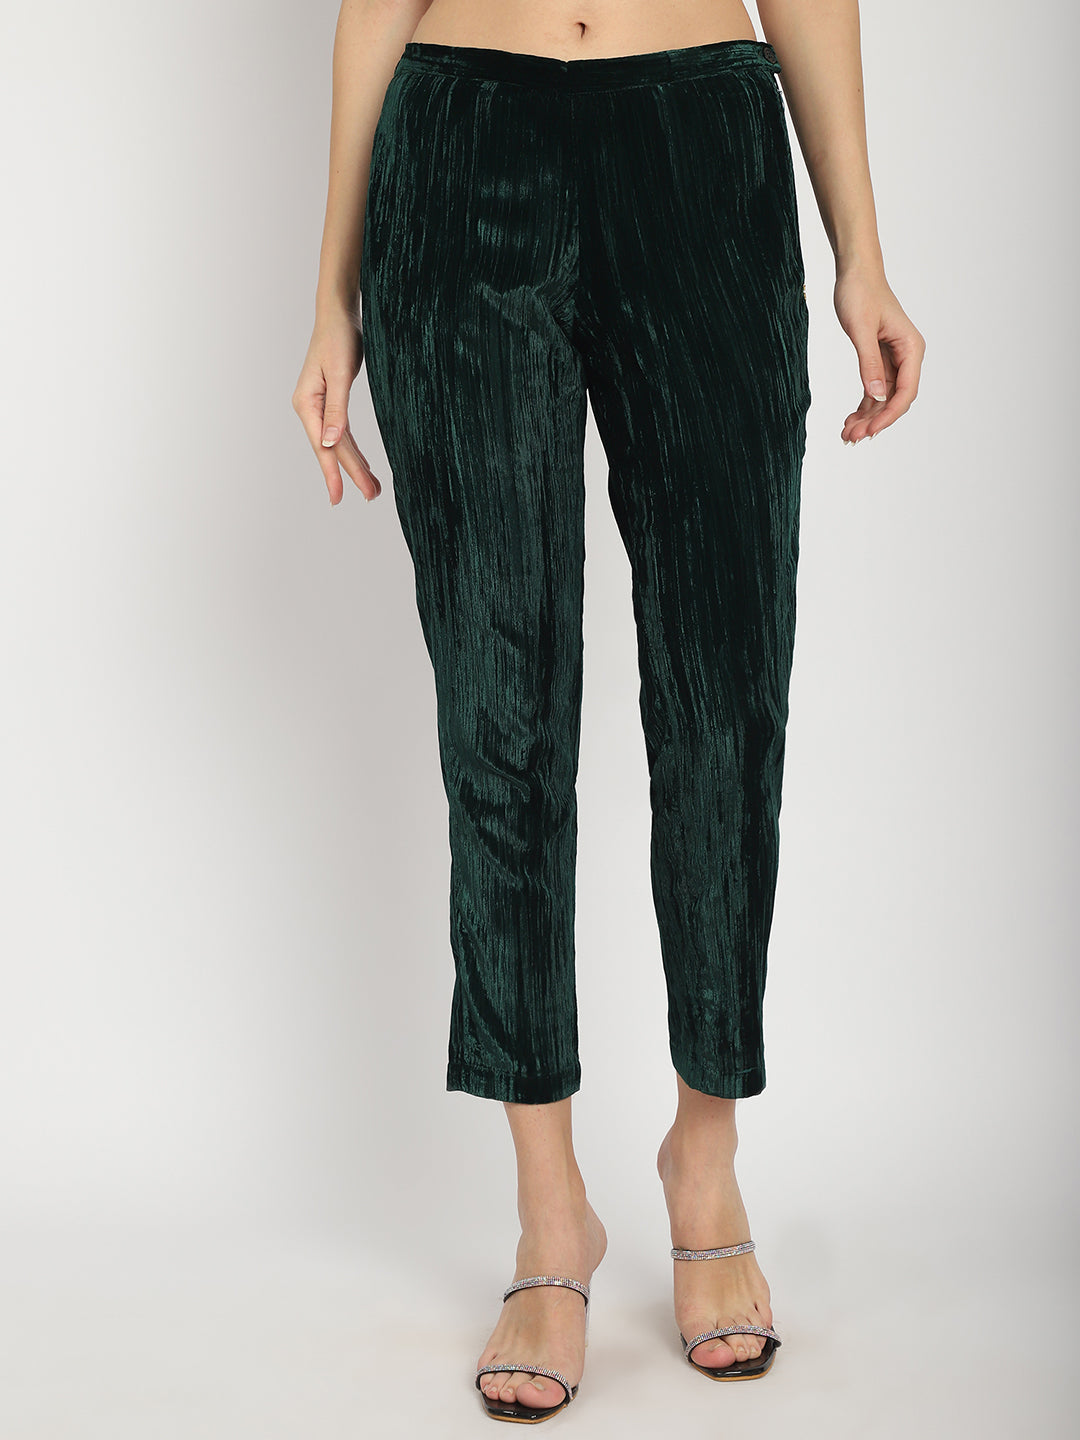 Black Velvet Pants Design by The Hem'd at Pernia's Pop Up Shop 2024